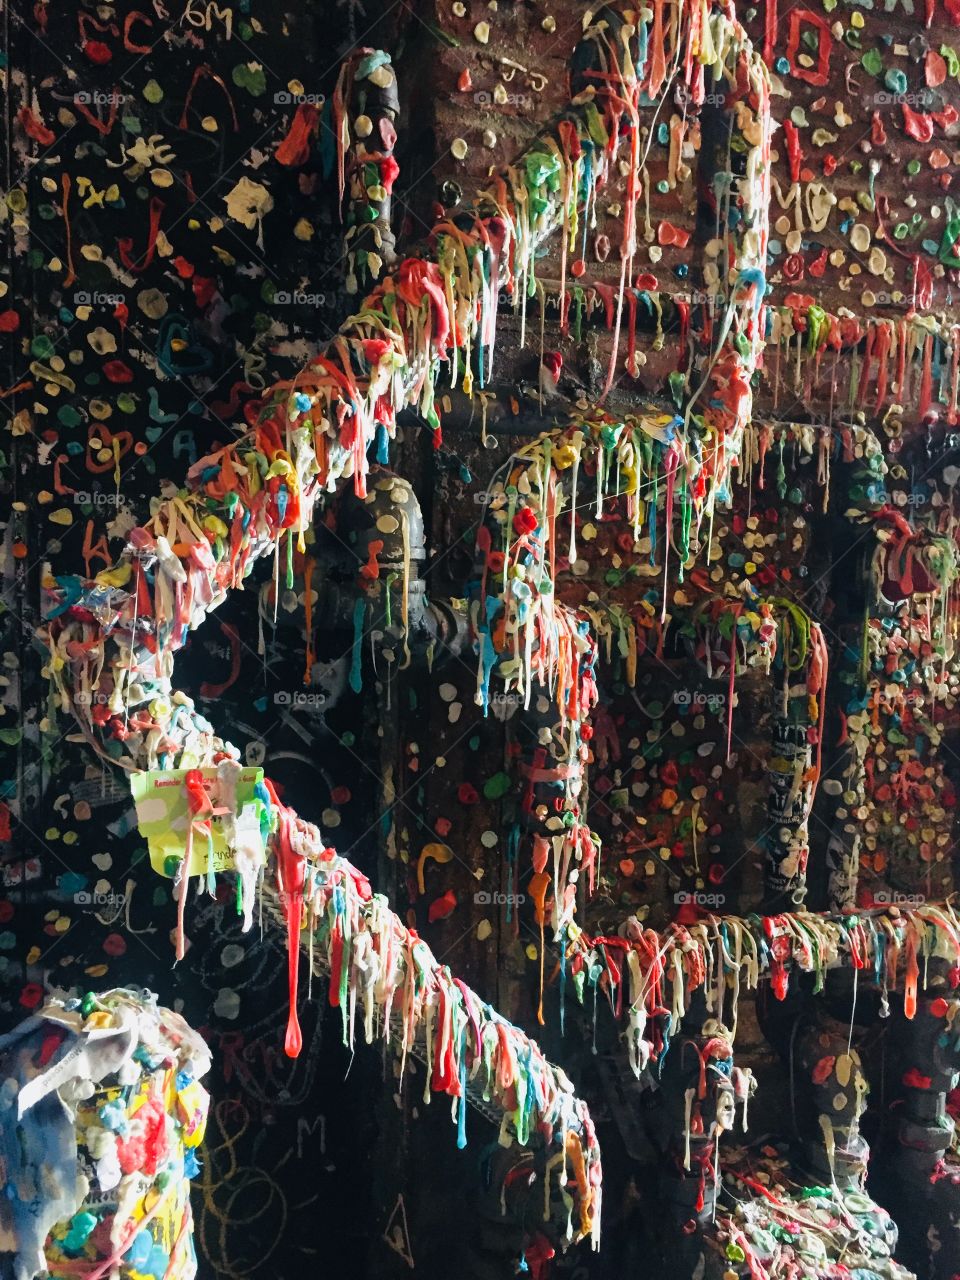 Gum wall, Seattle